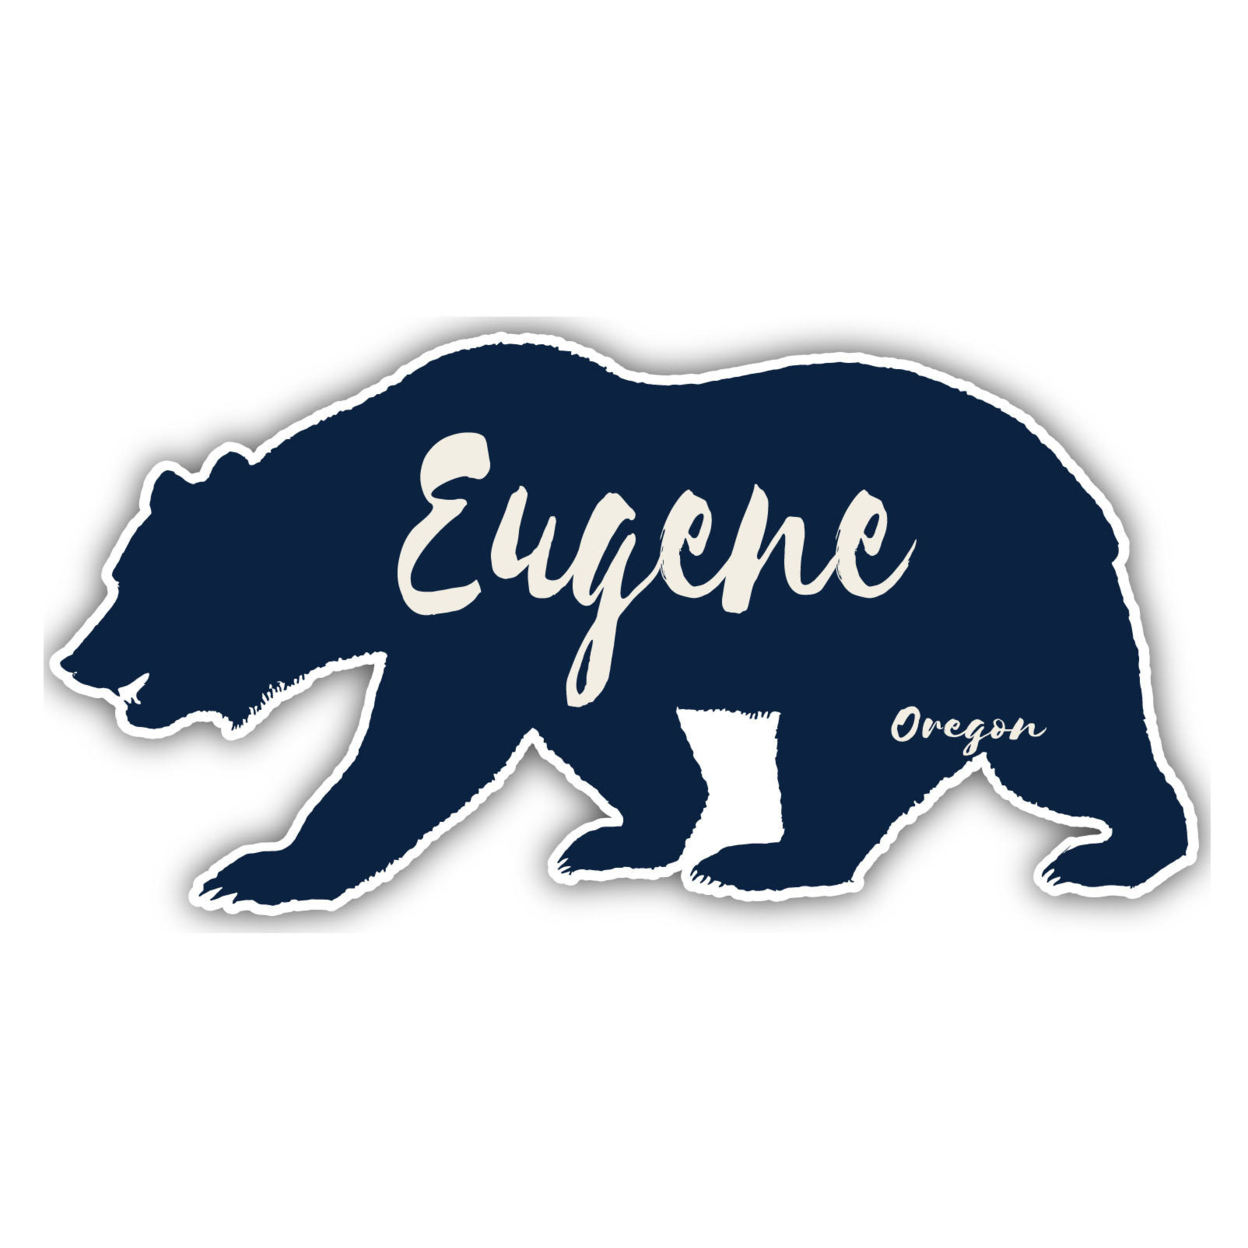 Eugene Oregon Souvenir Decorative Stickers (Choose Theme And Size) - Single Unit, 6-Inch, Bear